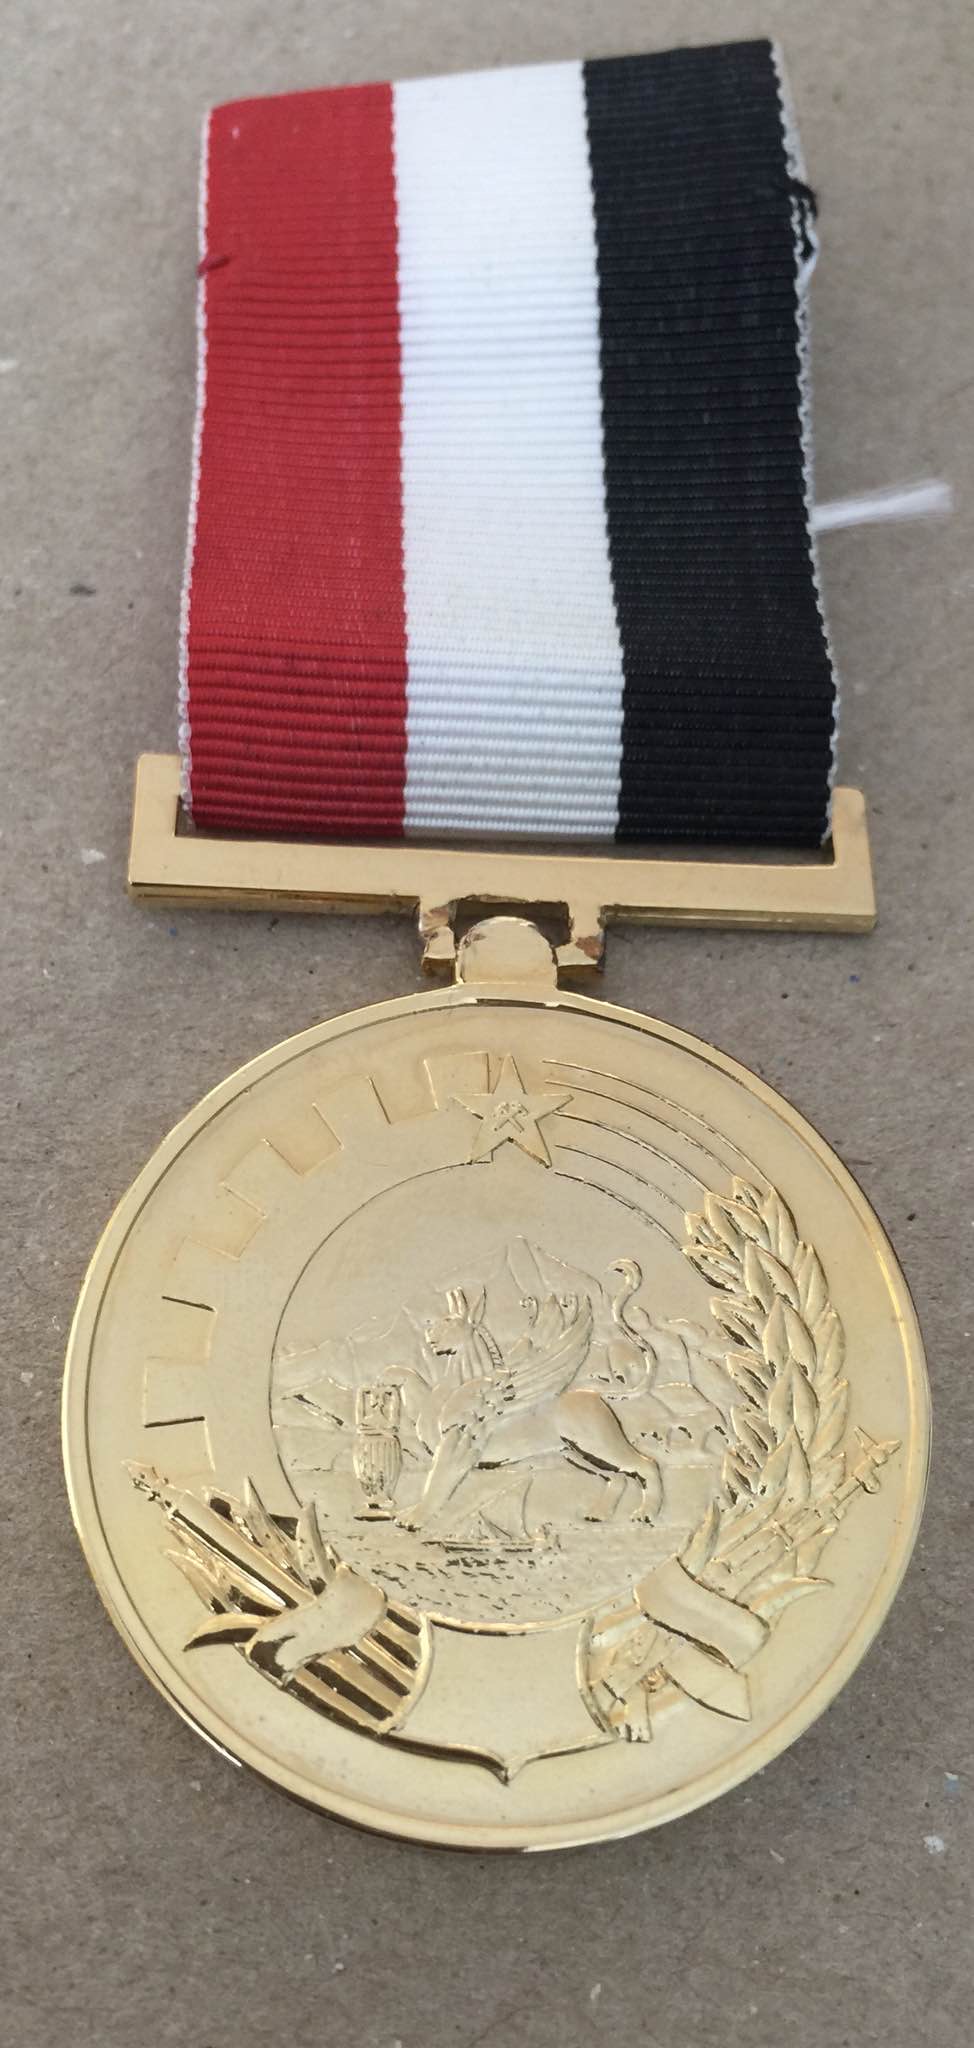 People's Democratic Republic of Yemen Order of Shabwa Badge Medal نيشان وسام شبوة جمهرية اليمن الشعبية الديمقراطية 